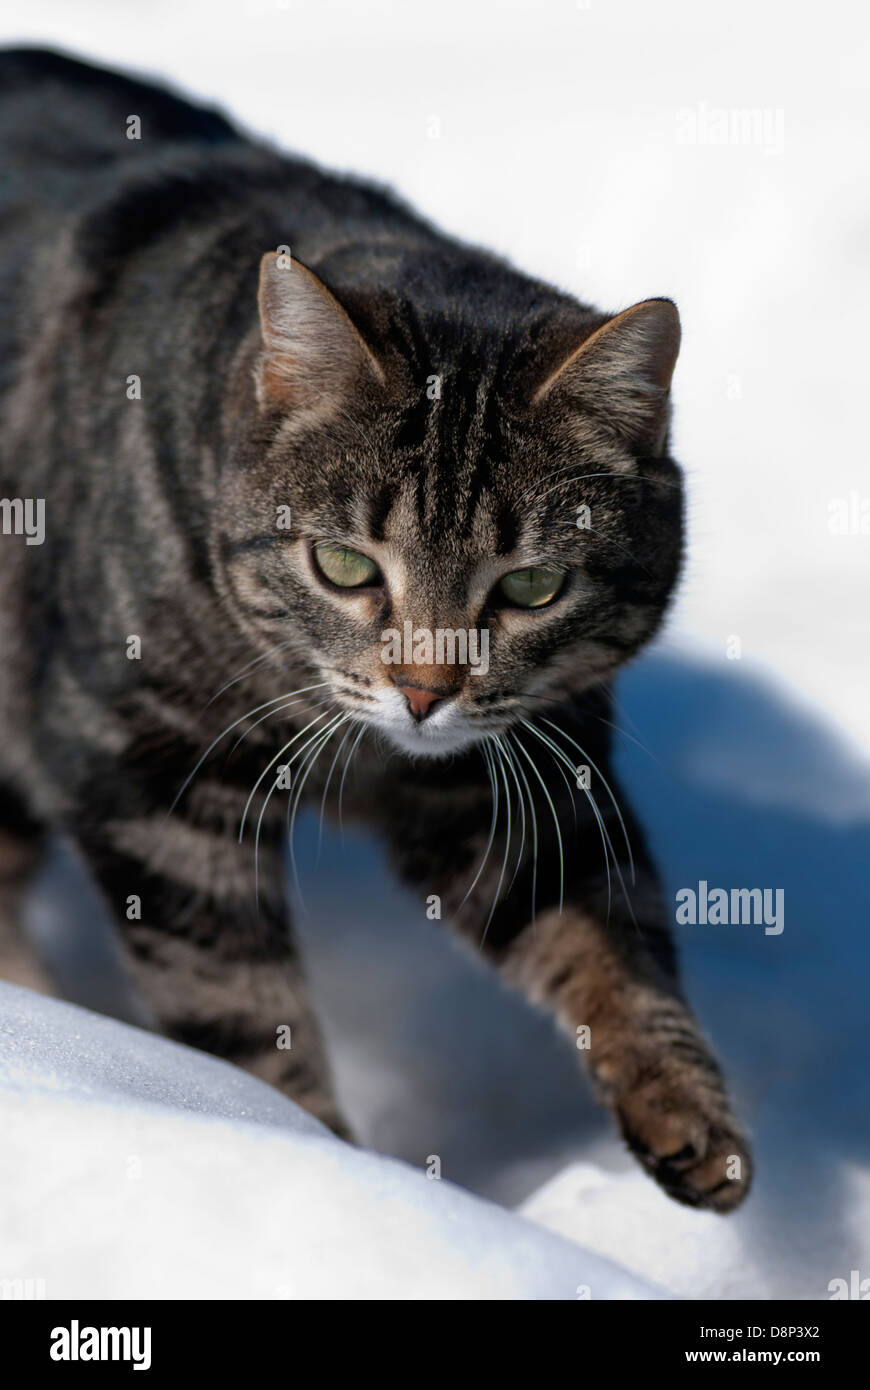 Tabby cat walking in snow Stock Photo